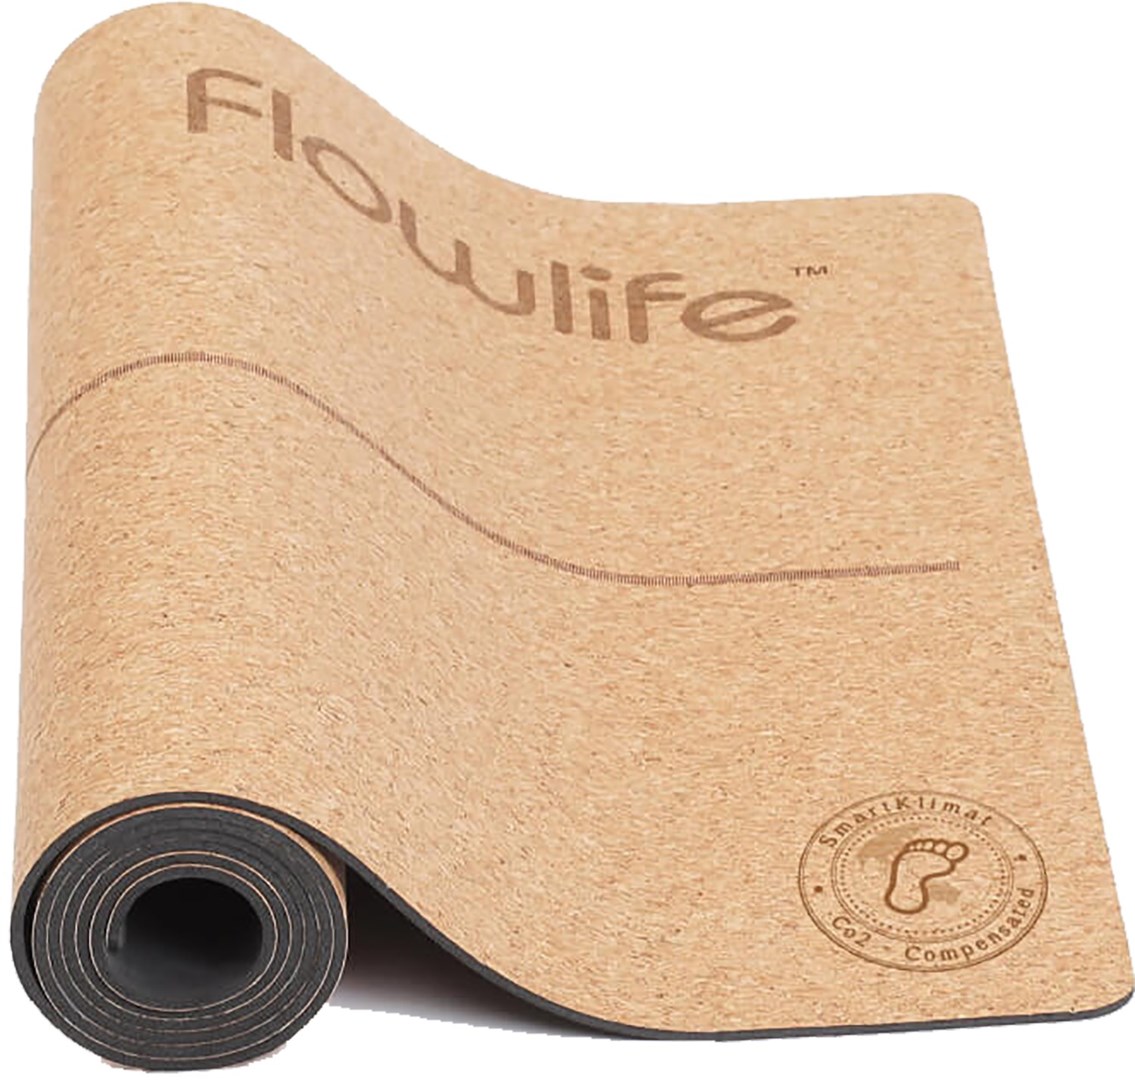 Flowlife Flowmat, Sustainable yoga mat